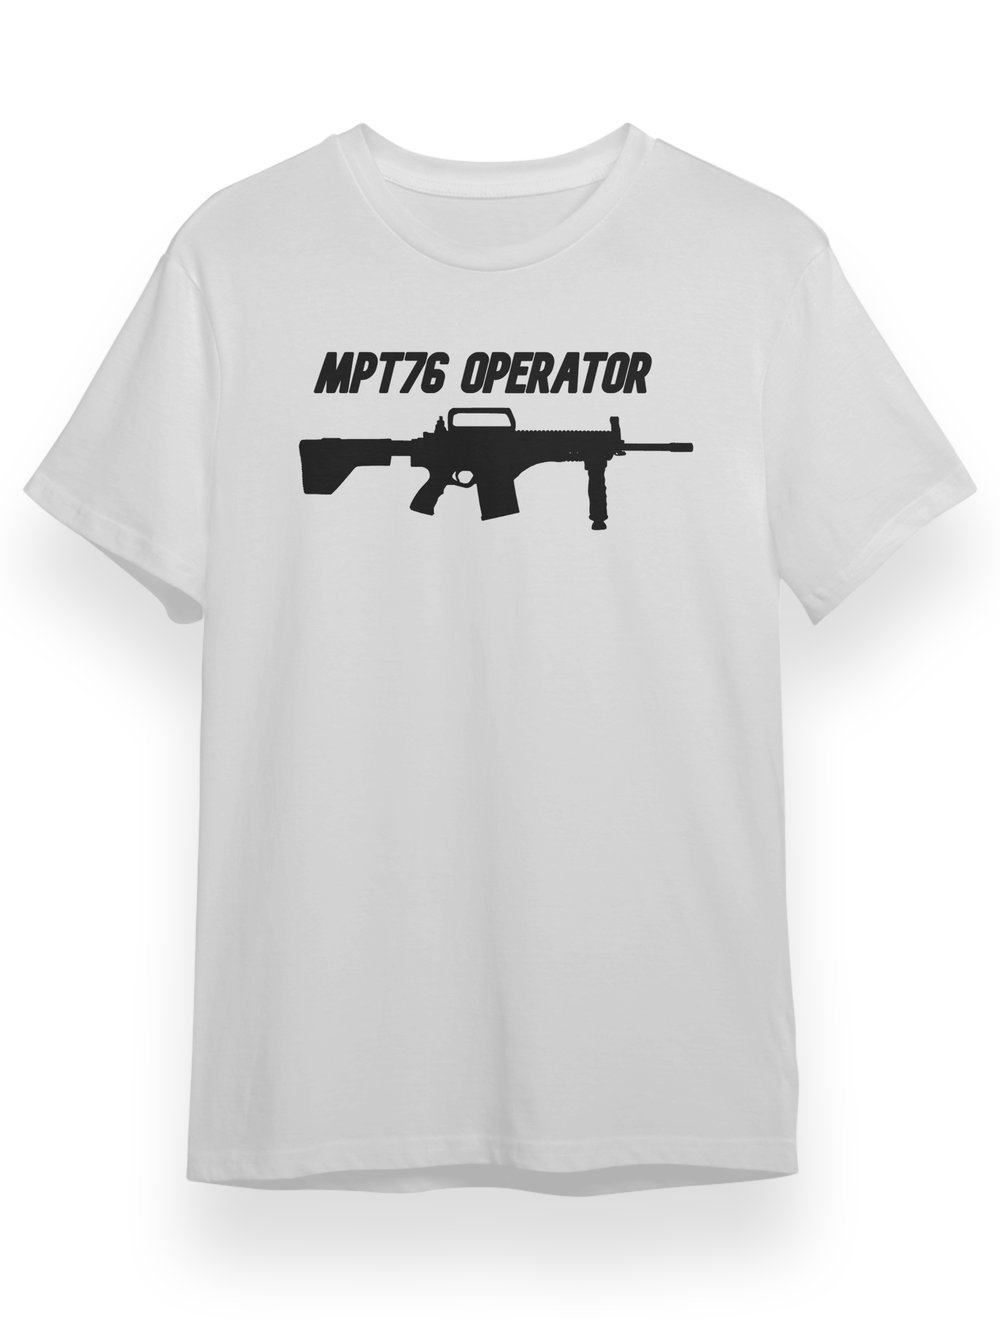 MPT76 OPERATOR